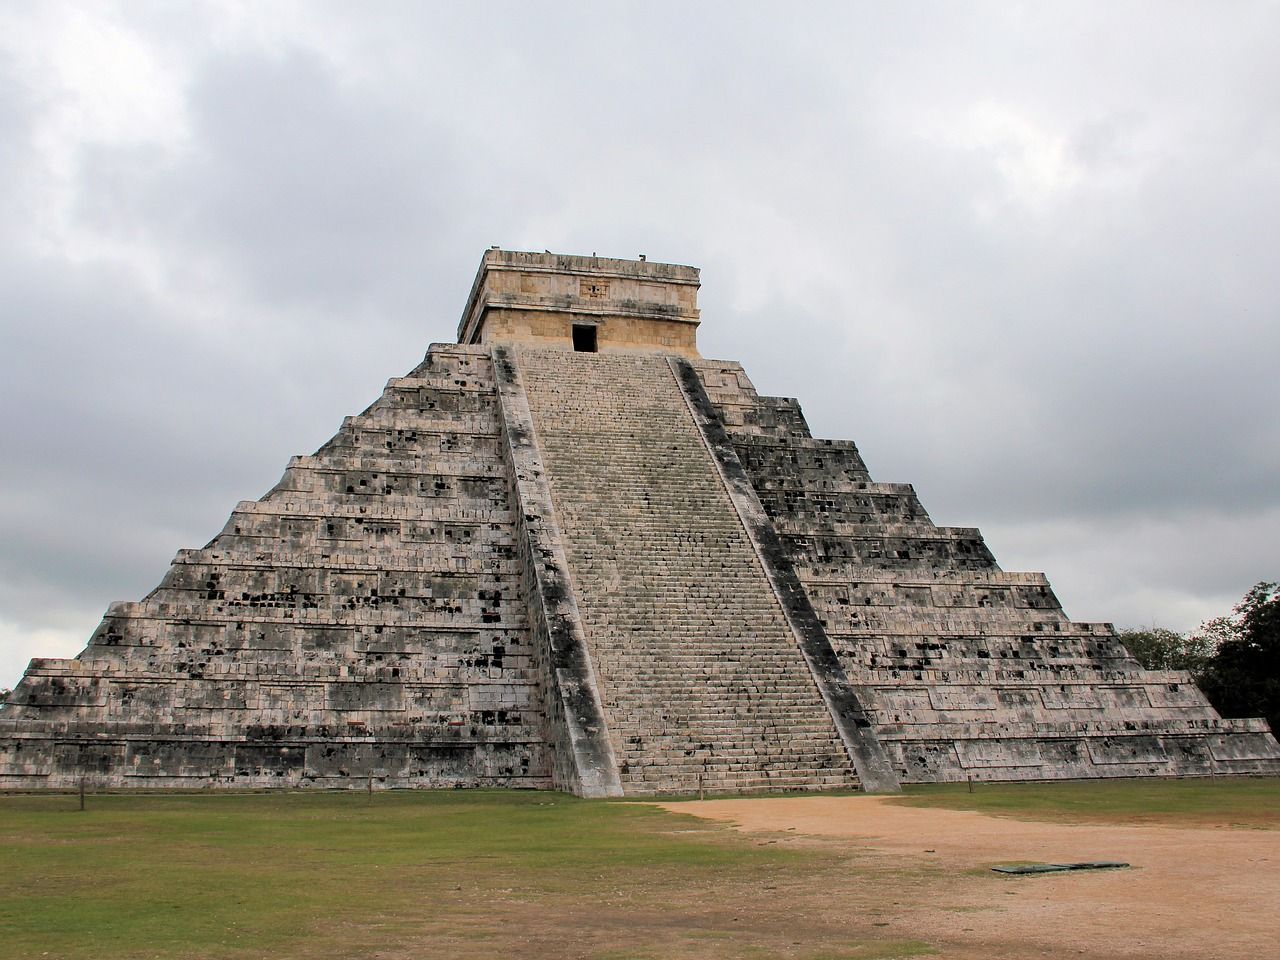 Pyramid of Kukulcan, Chichen Itza, Mexico